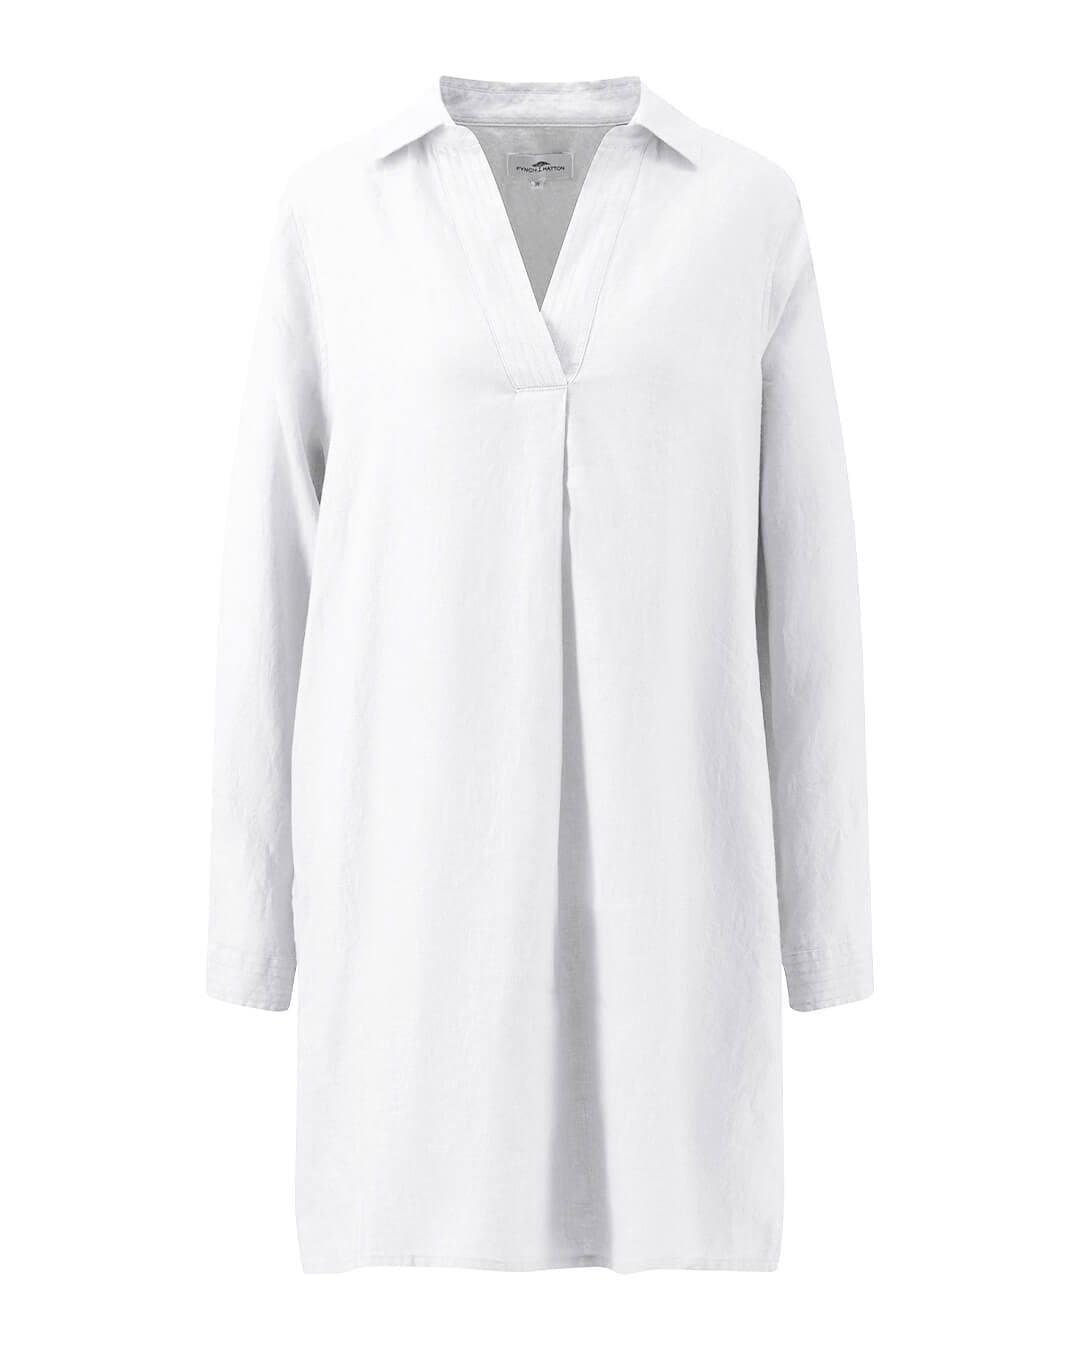 Fynch-Hatton Dresses Fynch-Hatton White Linen Tunic Dress